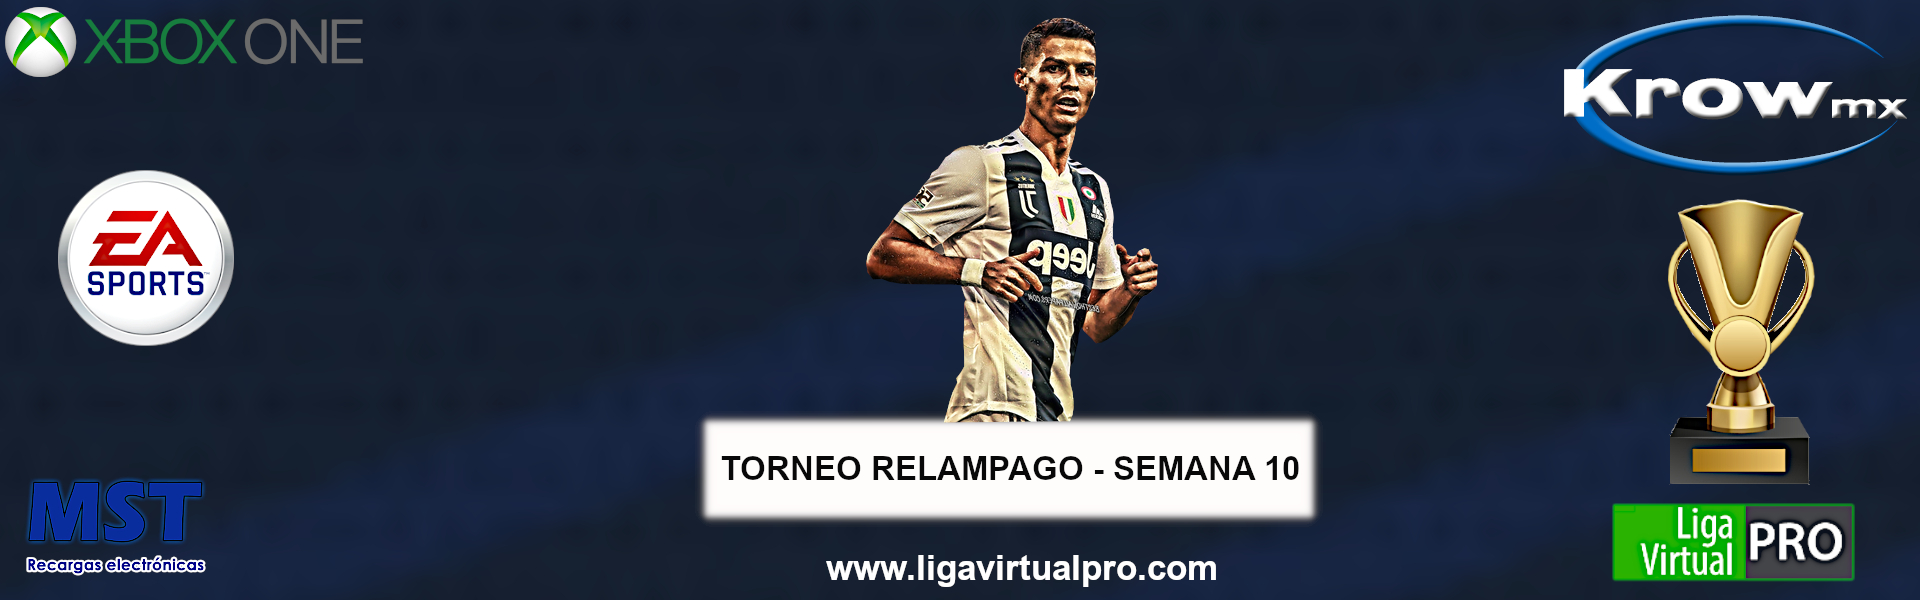 Logo-TORNEO RELAMPAGO - SEMANA 10